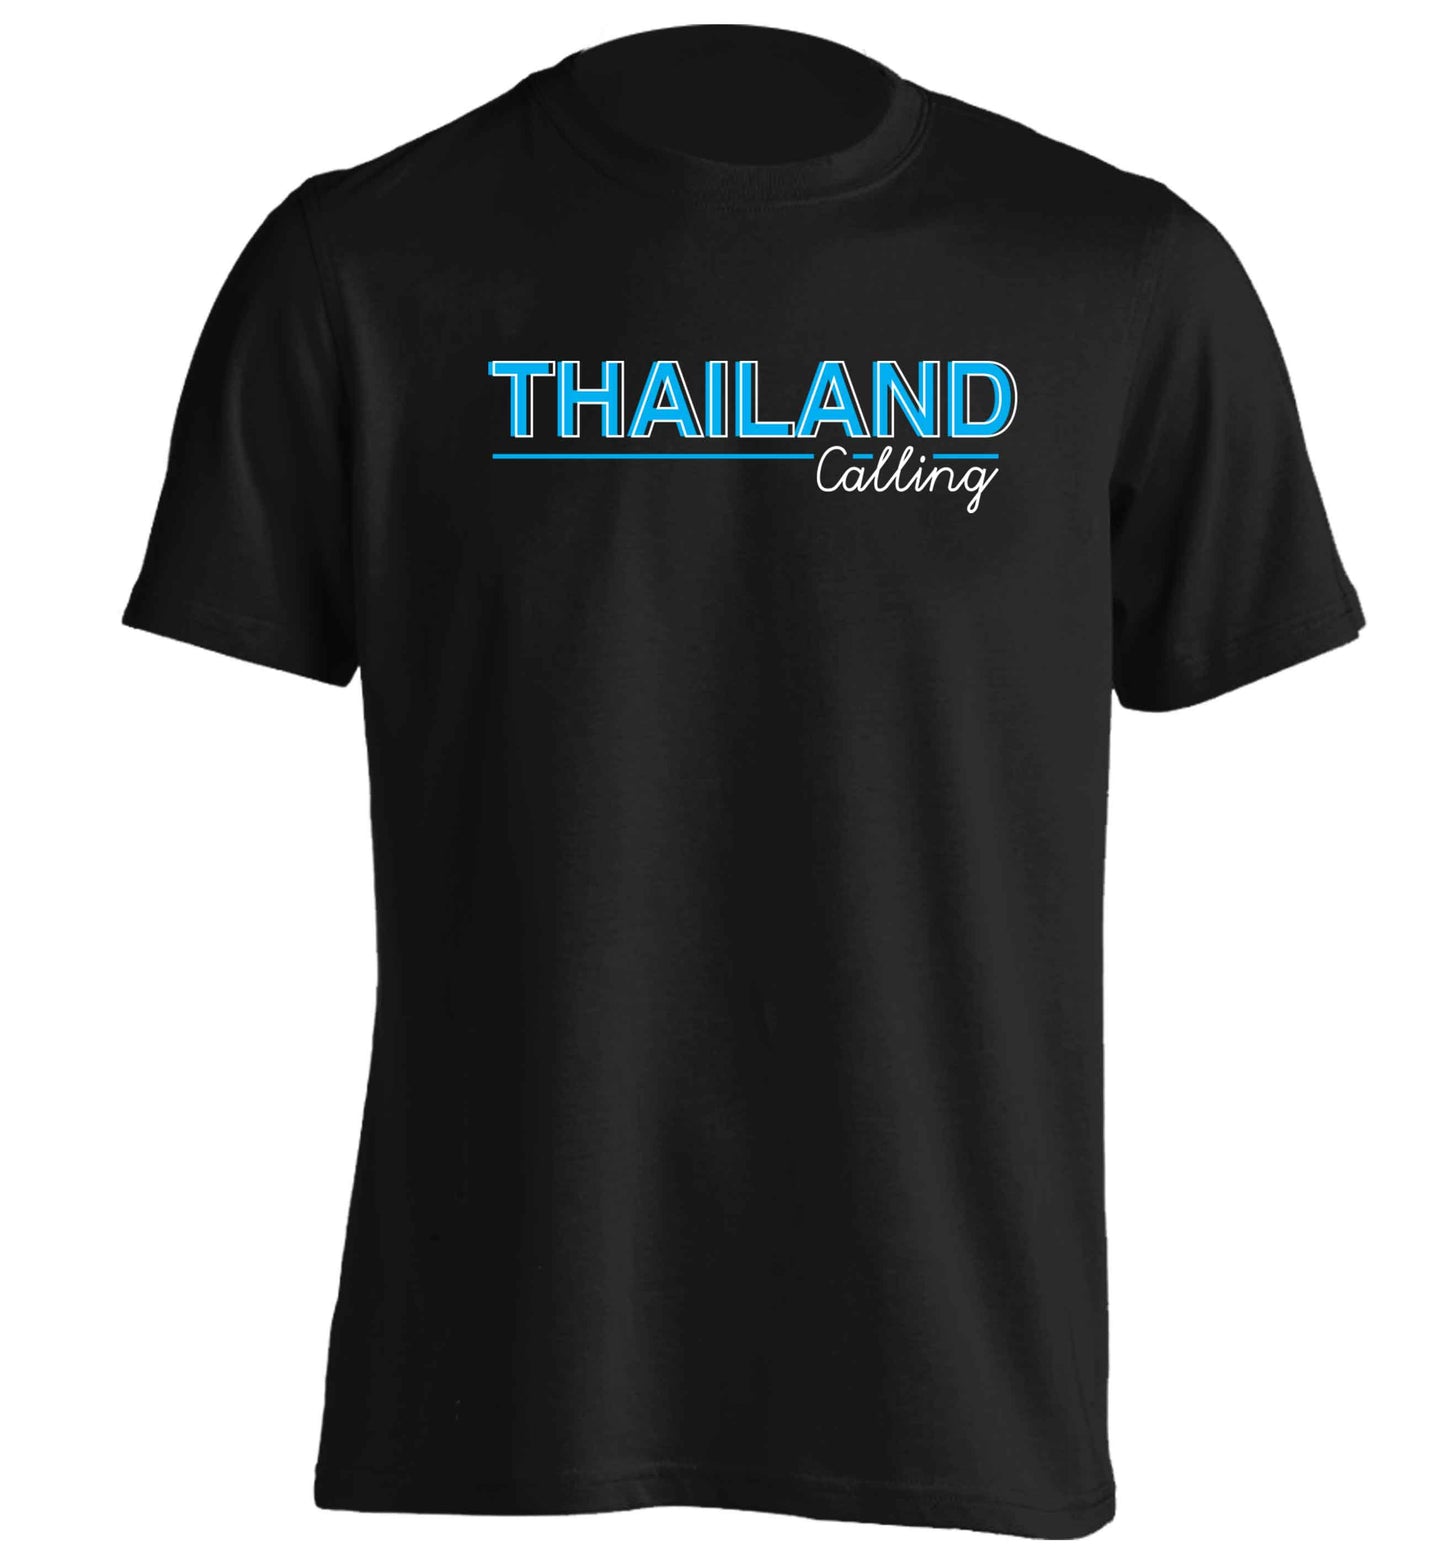 Thailand calling adults unisex black Tshirt 2XL